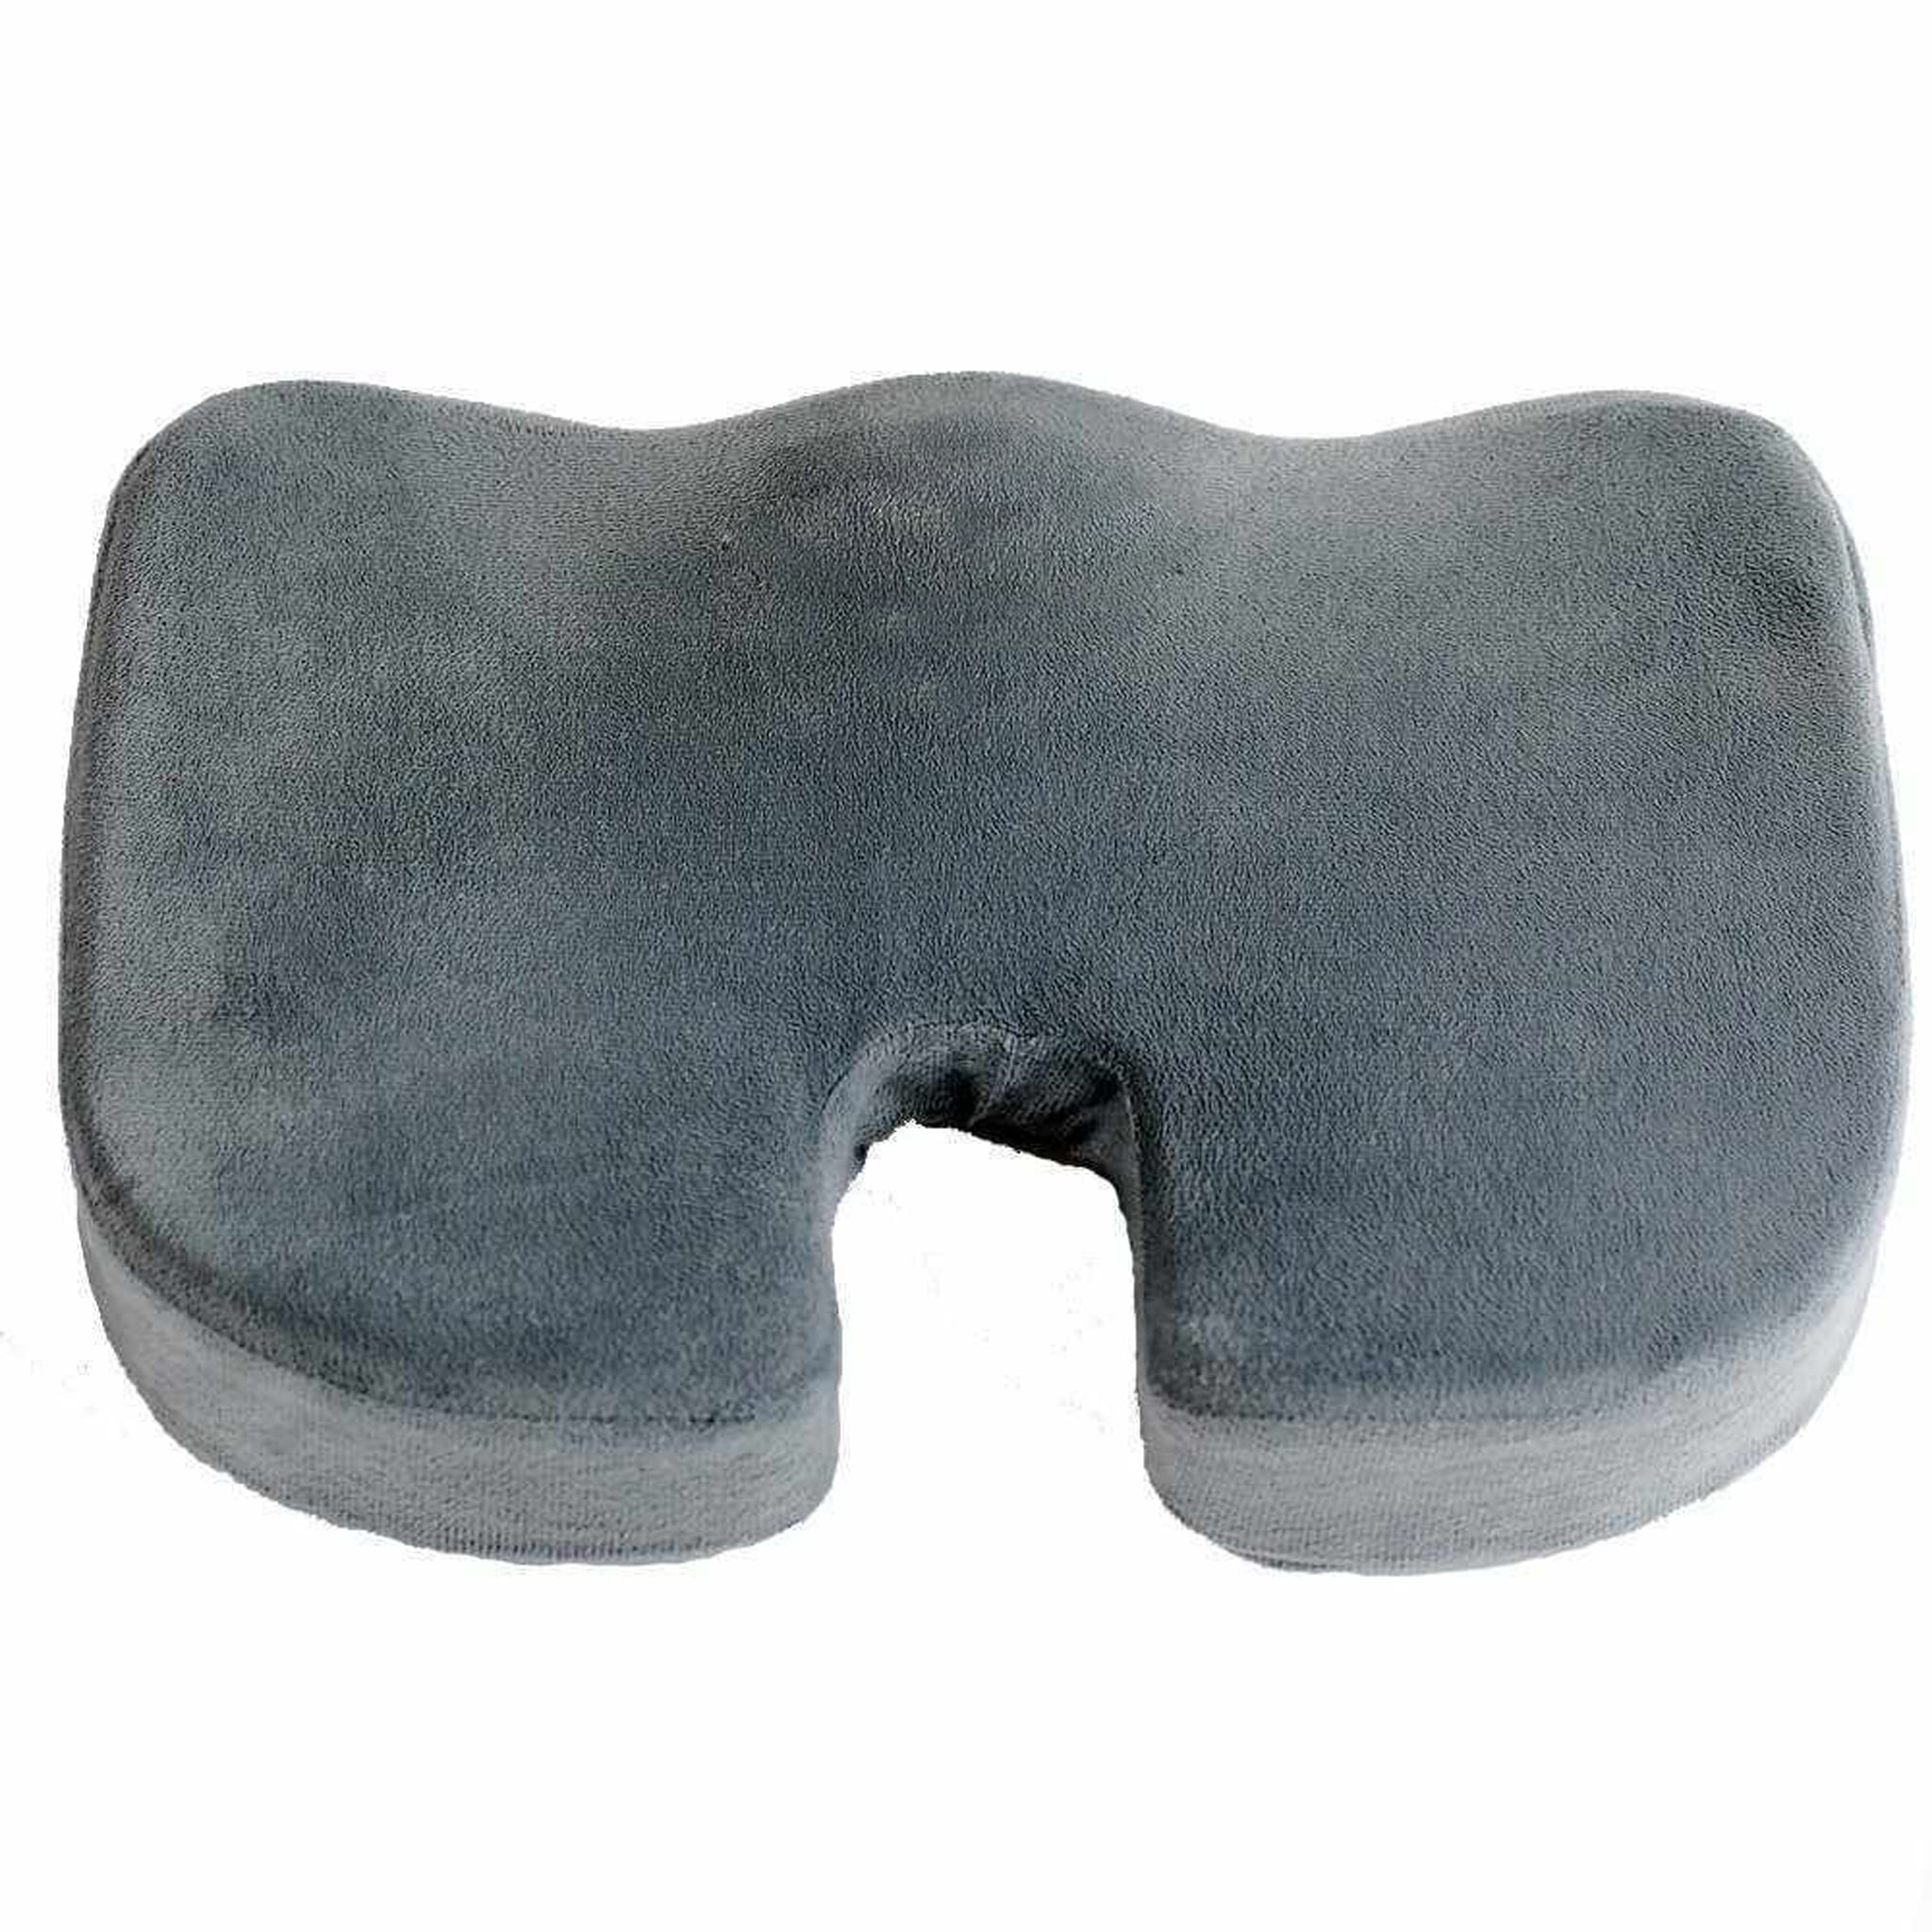 iHealthComfort Potable Wedge Seat Cushion Memory Foam Wellness Orthopedic Cushion 